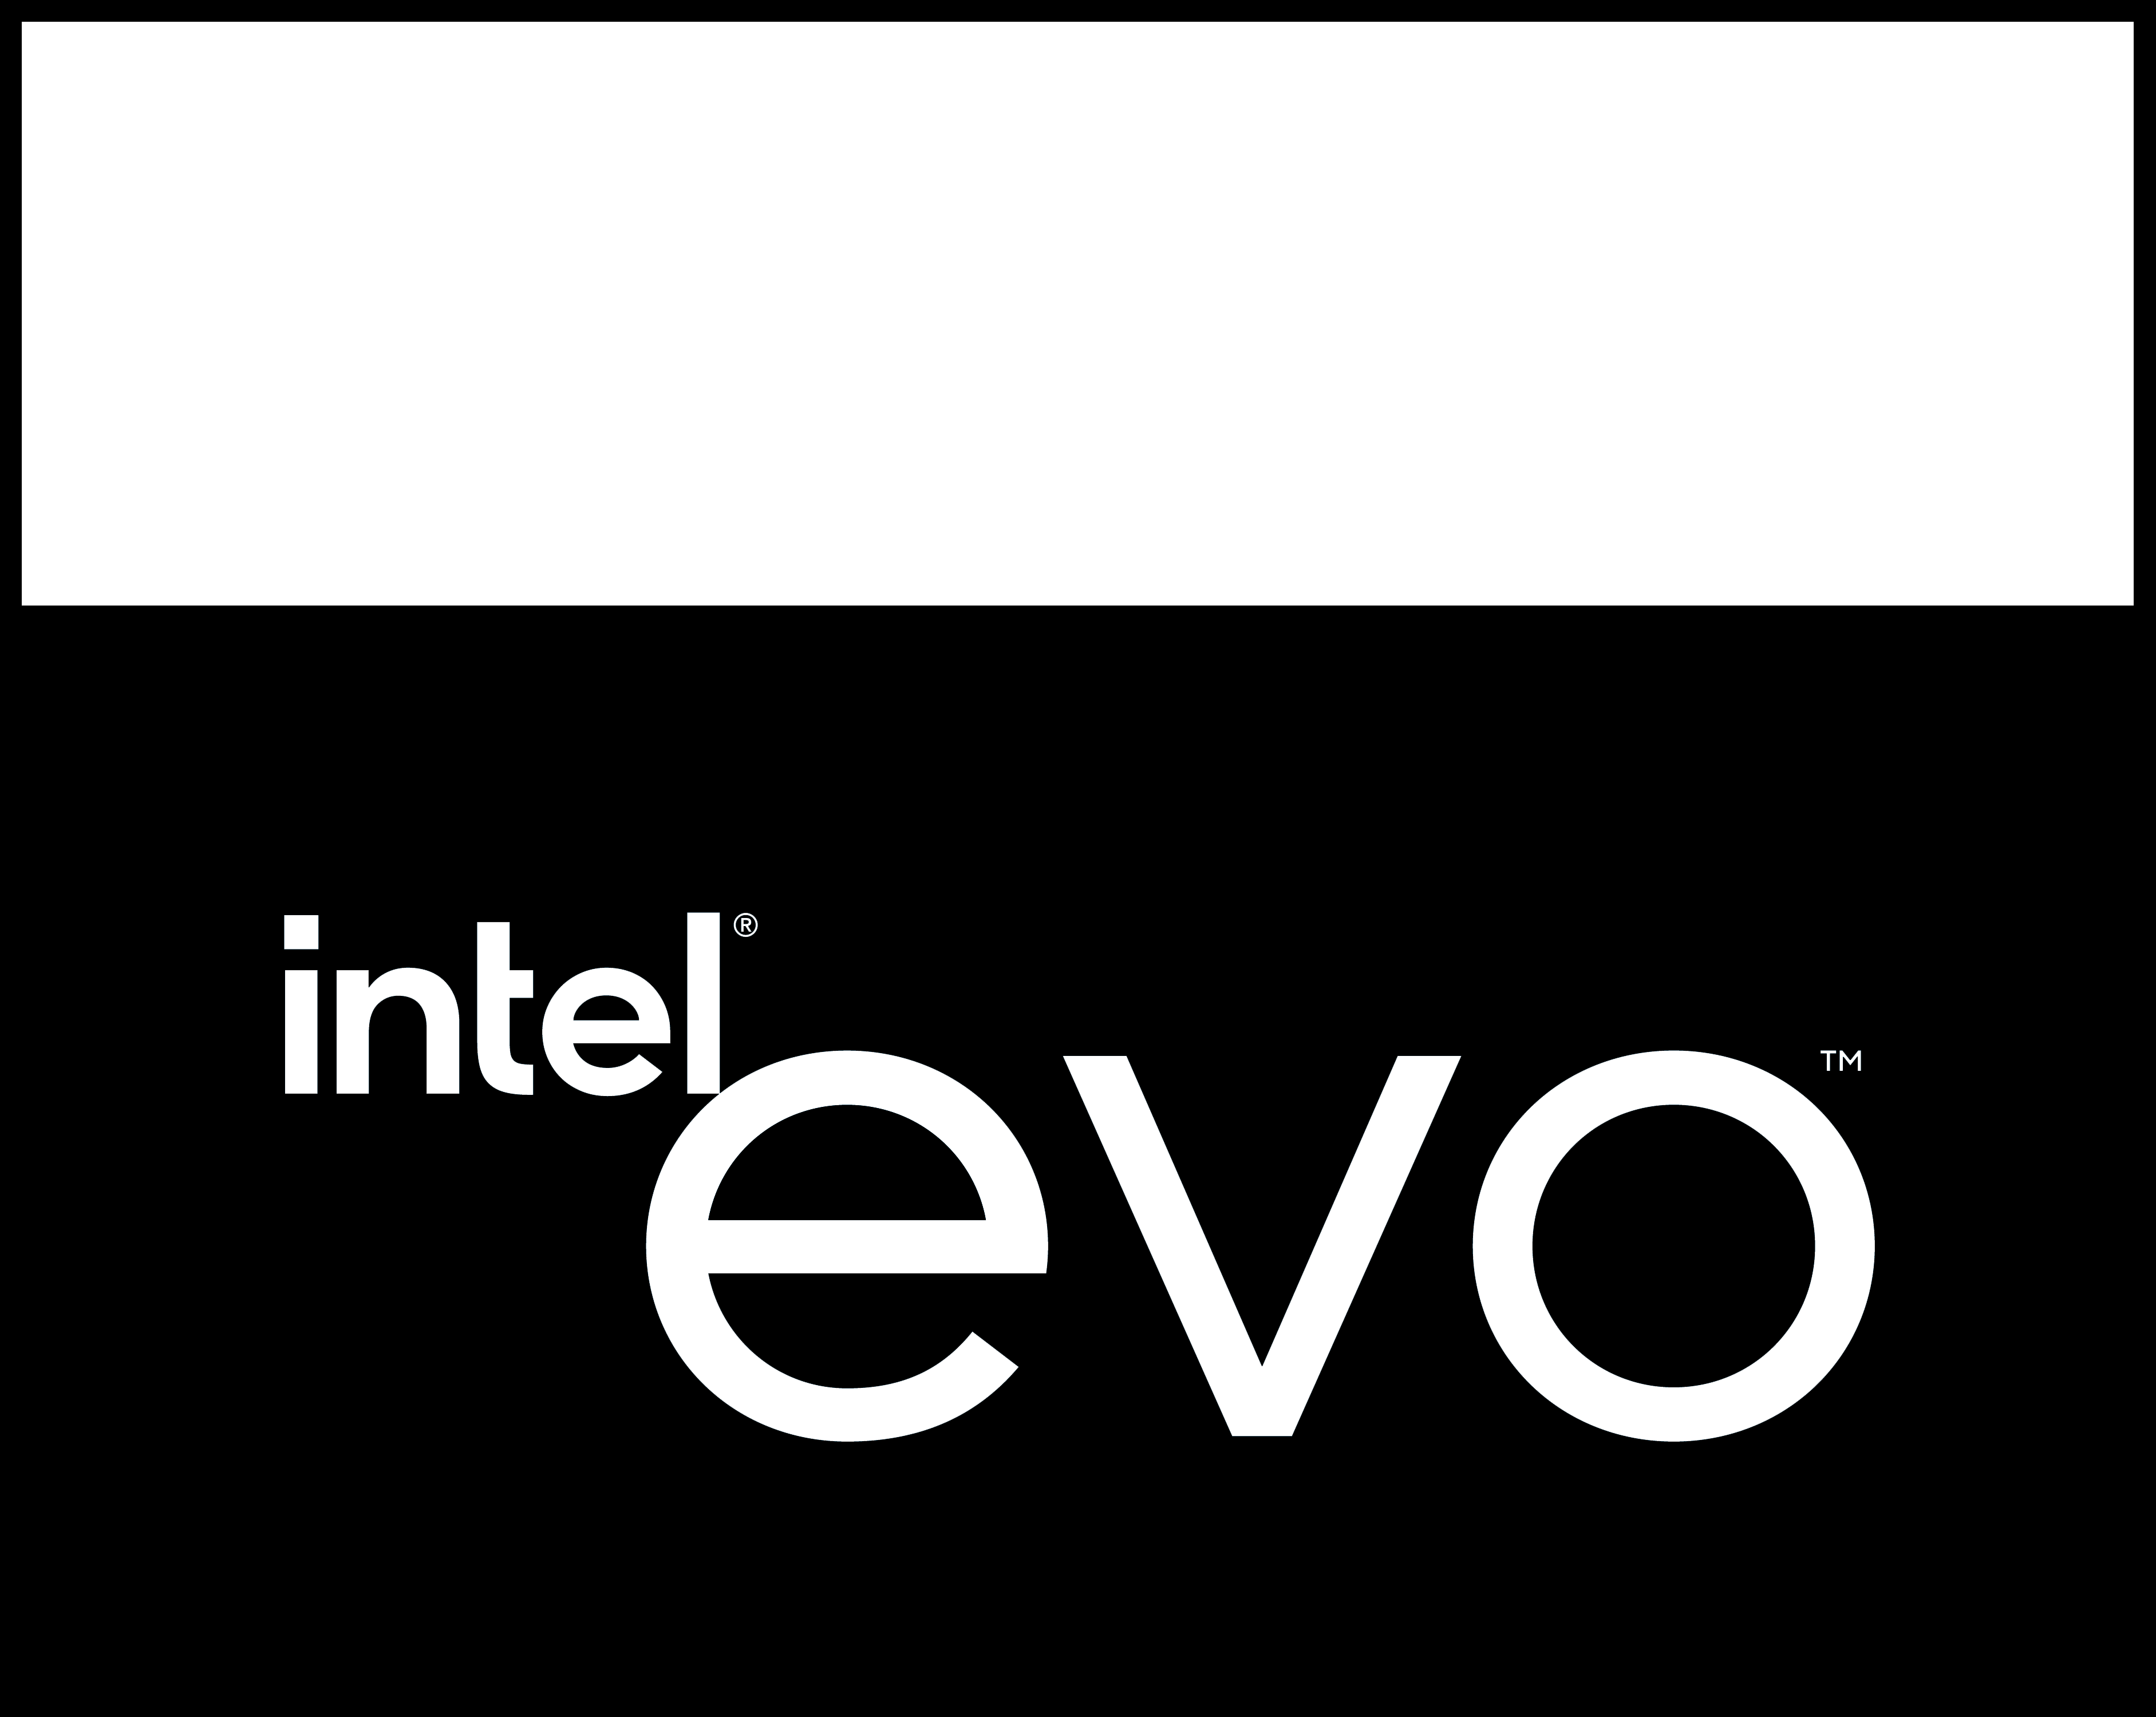 Engineered for Intel Evo